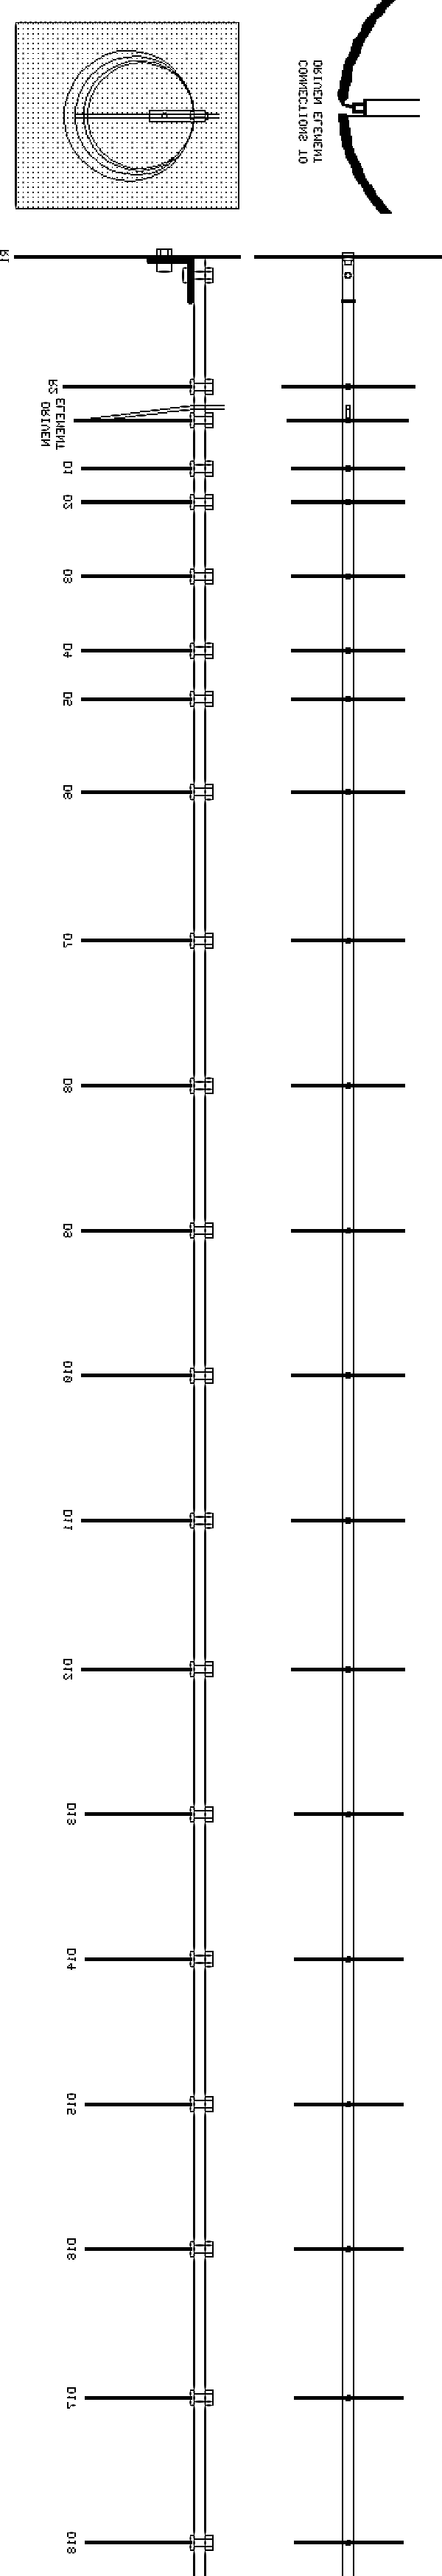 Schematic Of A 70 Cm Yagi Loop Antenna